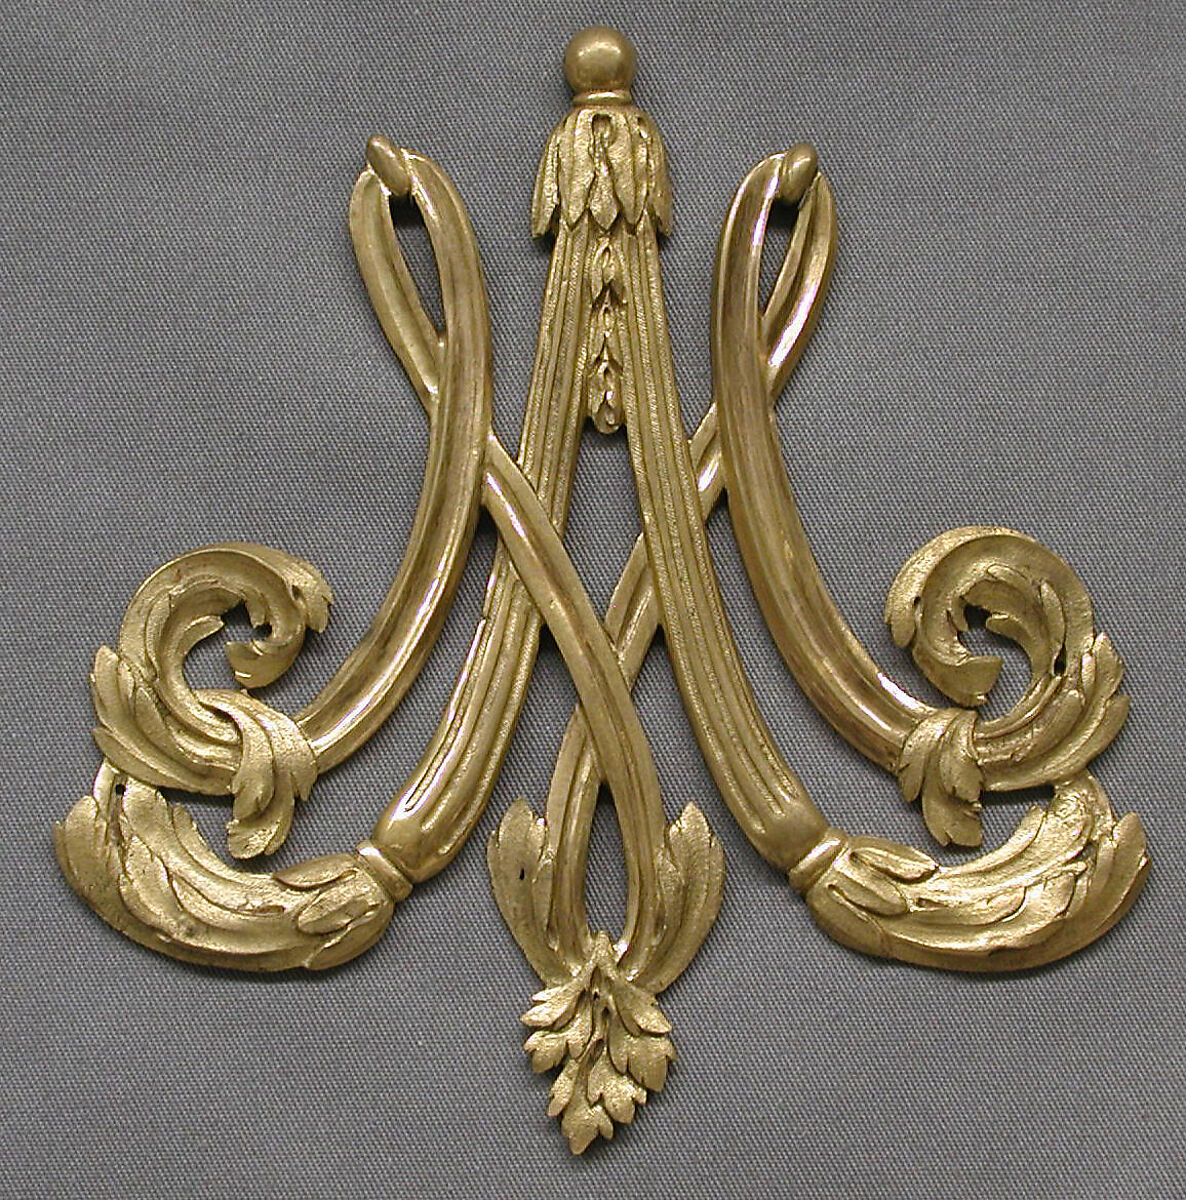 Vase ornament, Gilt bronze, French 